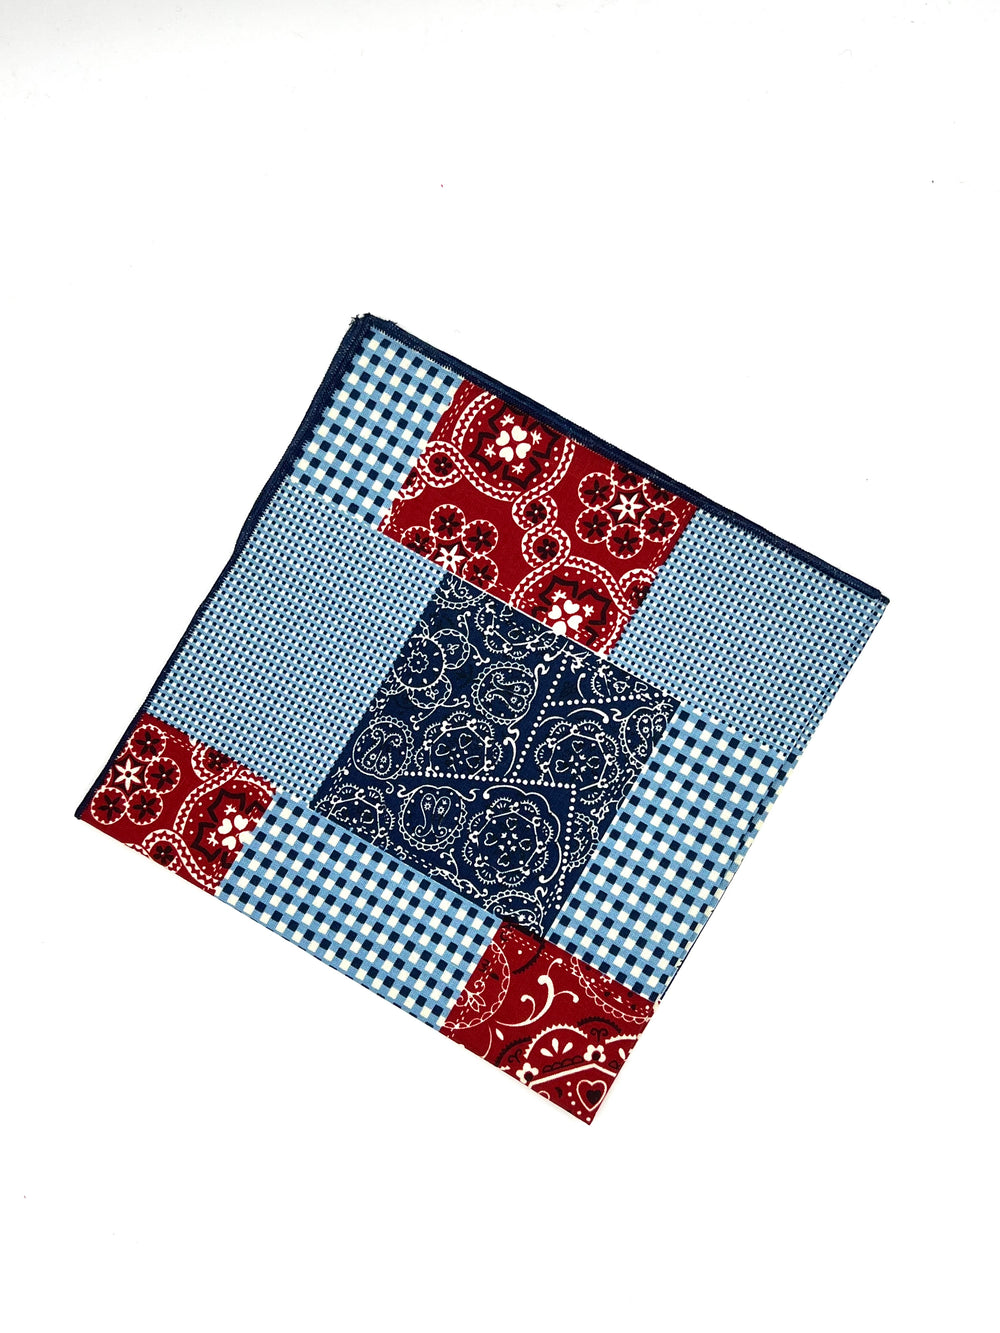 The Patchwork Paisley Handkerchief